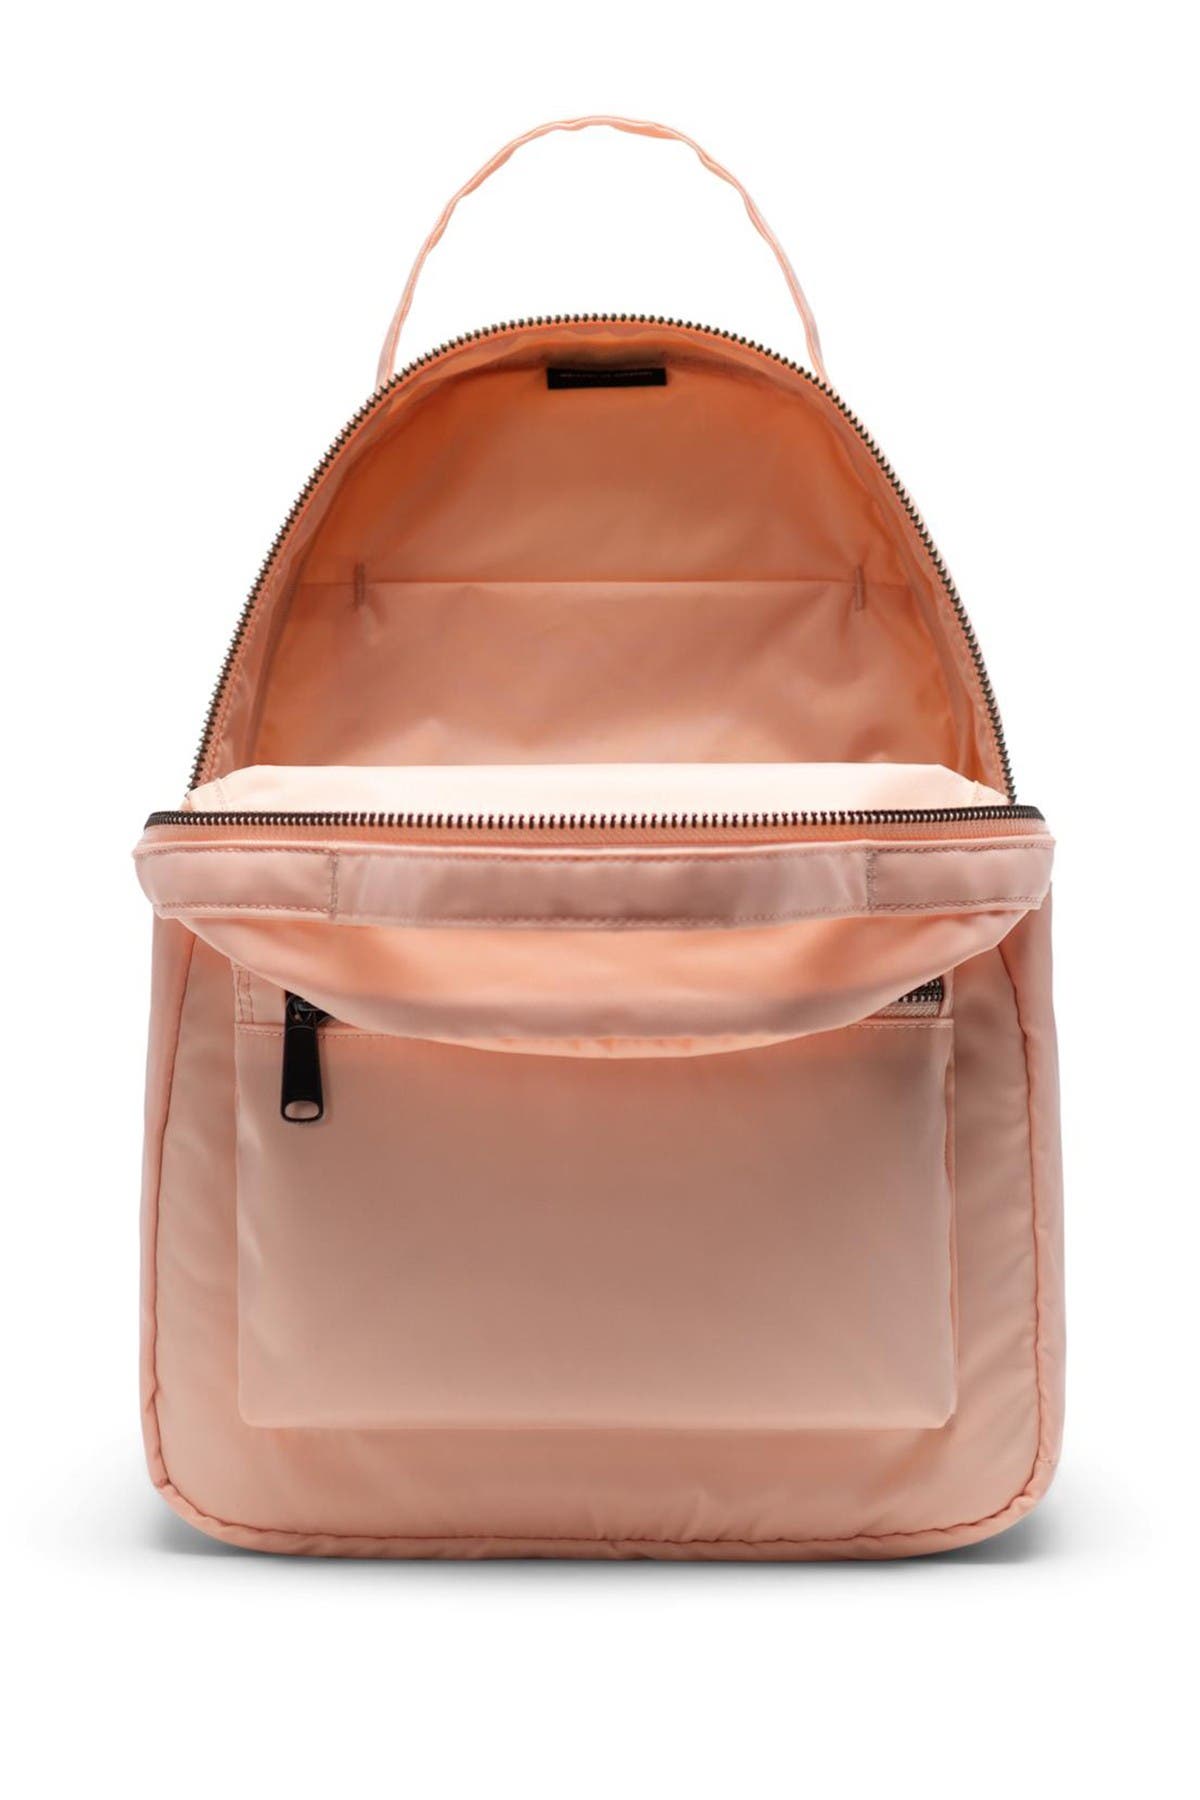 Herschel Supply Co Nova Small Twill Backpack In Dark Orange7